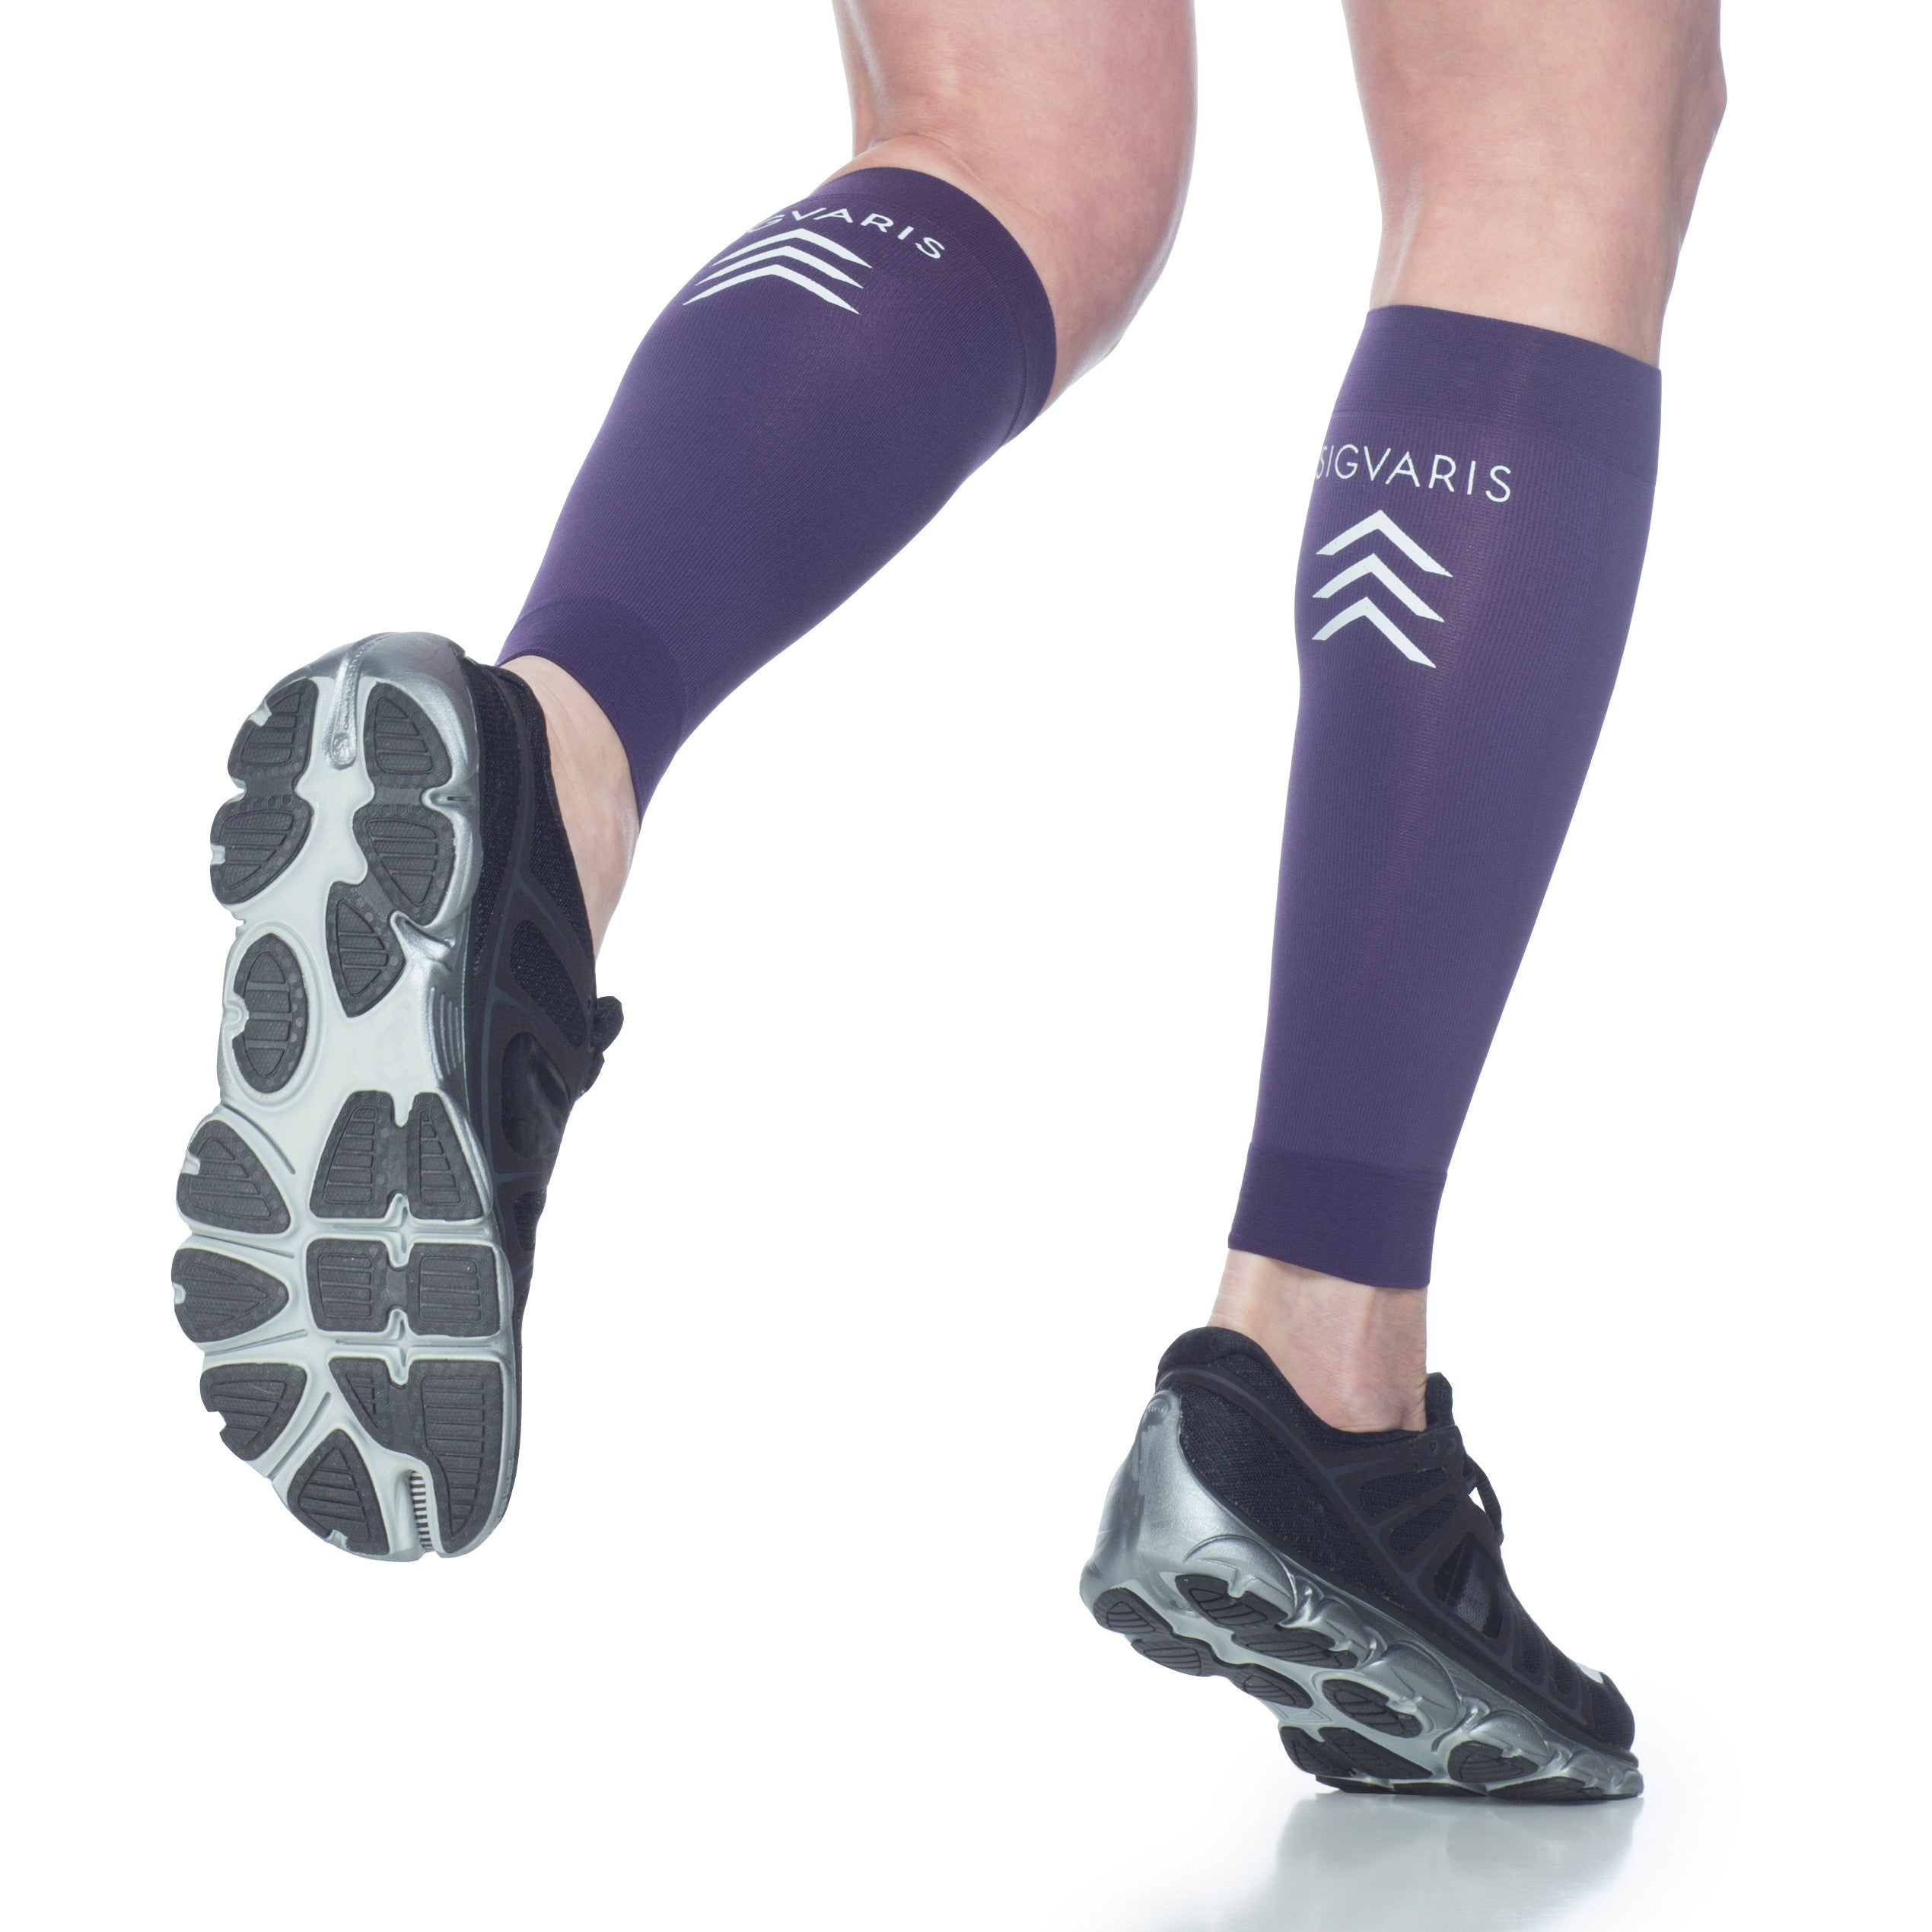 Hue Purple Long Soccer Leg Sleeves – SLEEFS